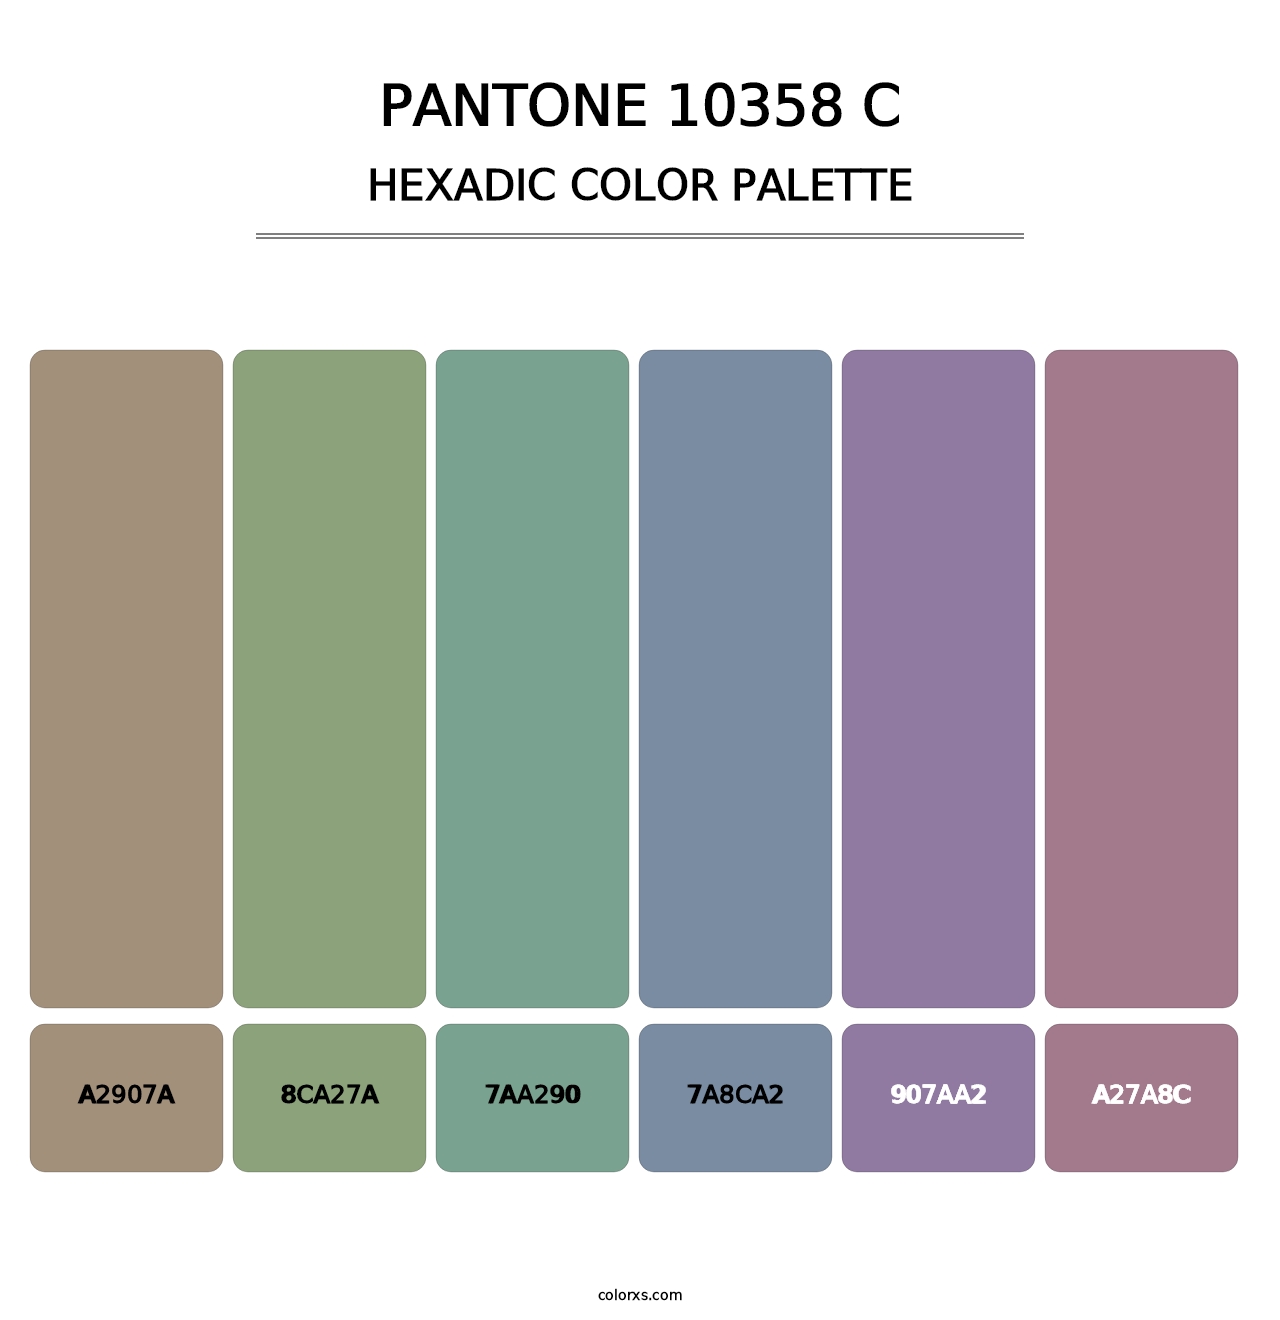 PANTONE 10358 C - Hexadic Color Palette